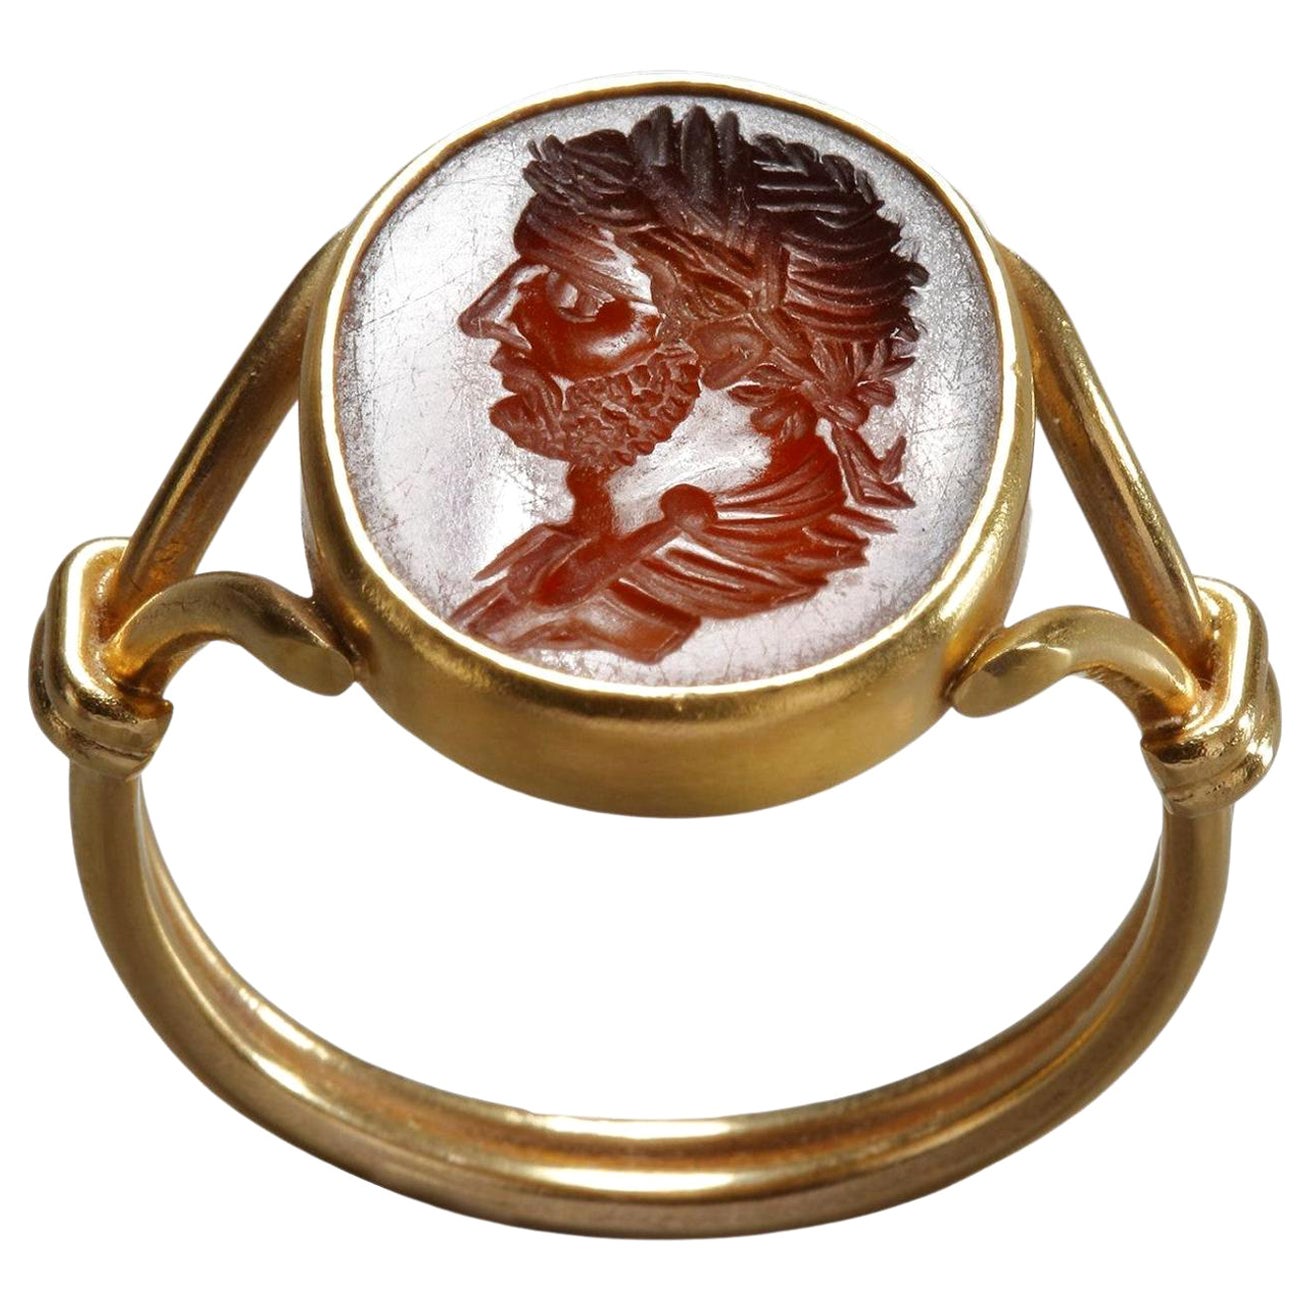 Renaissance Carnelian Intaglio Emperor Hadrian Gold Ring Circa 17th Century A.D.